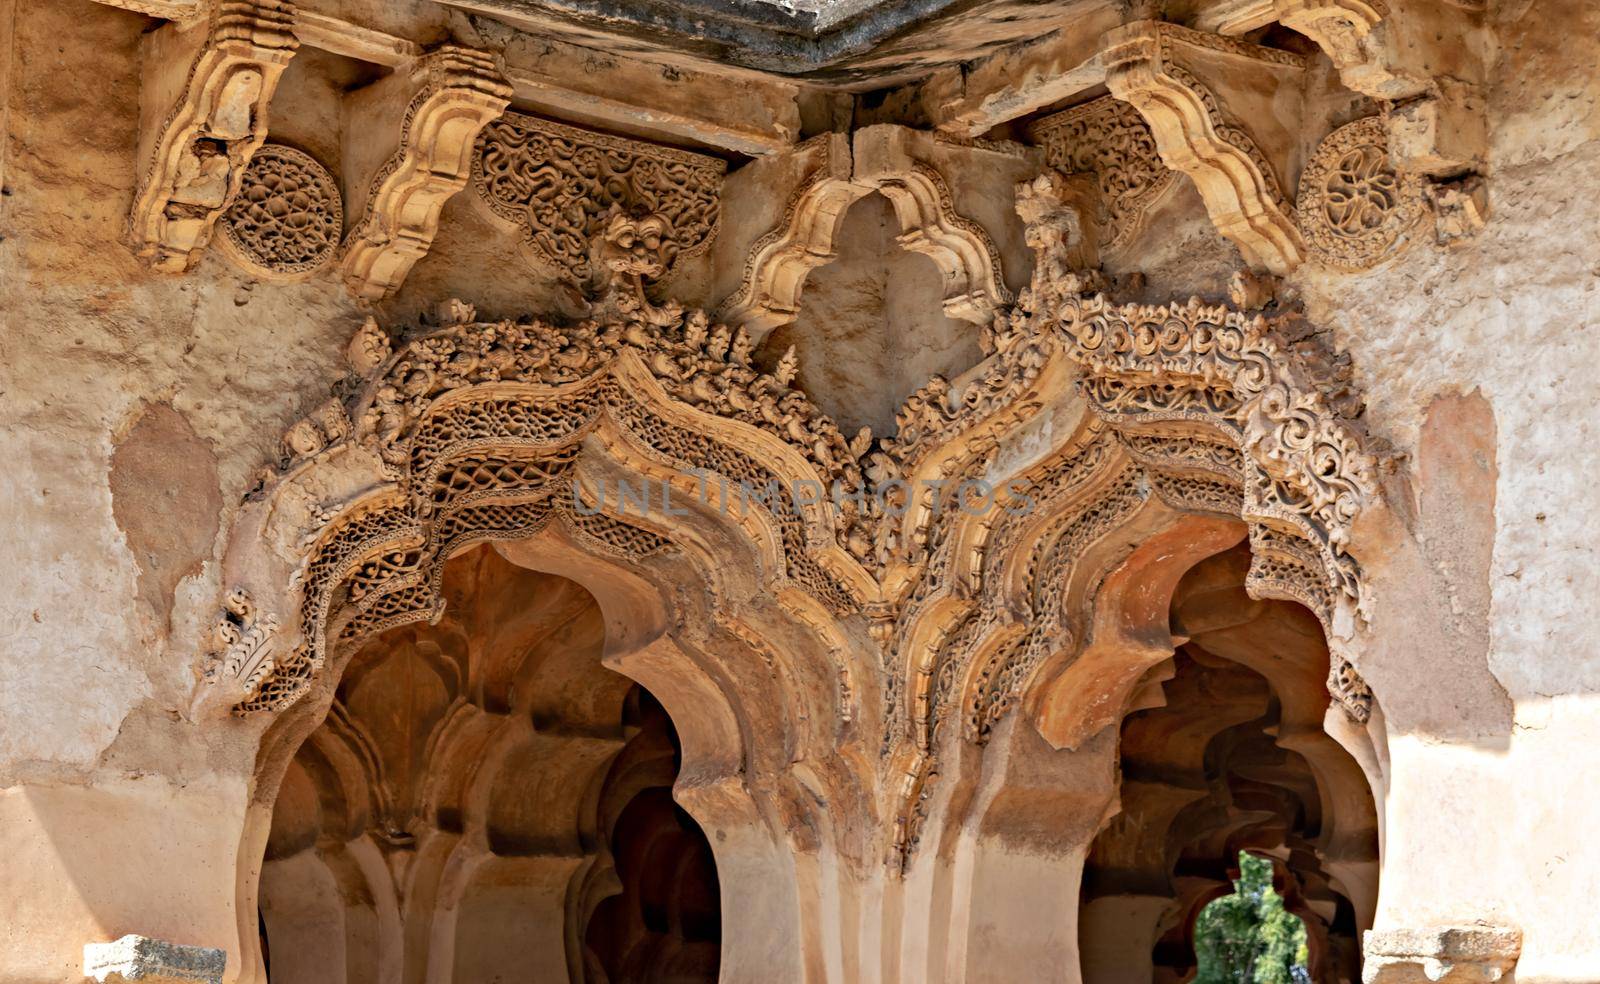 Close up image of Exquisite ancient carving inside Lotus mahal temple in Hampi , Karnataka, India.